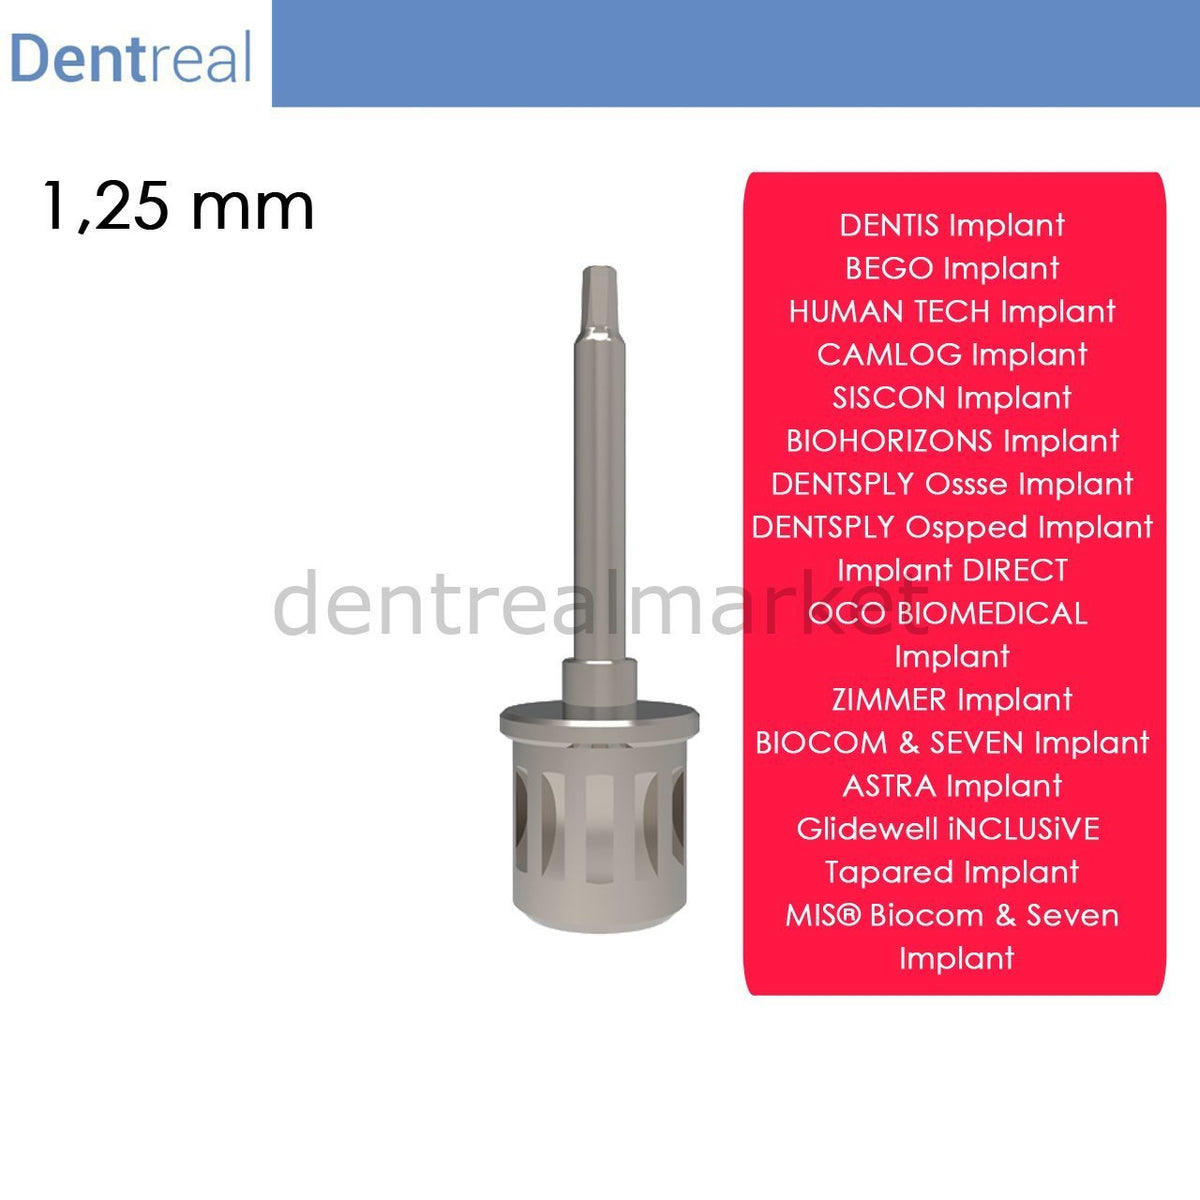 DentrealStore - Dentreal Screwdriver for Biocom & Seven Implant - 1.25 mm Hex Driver